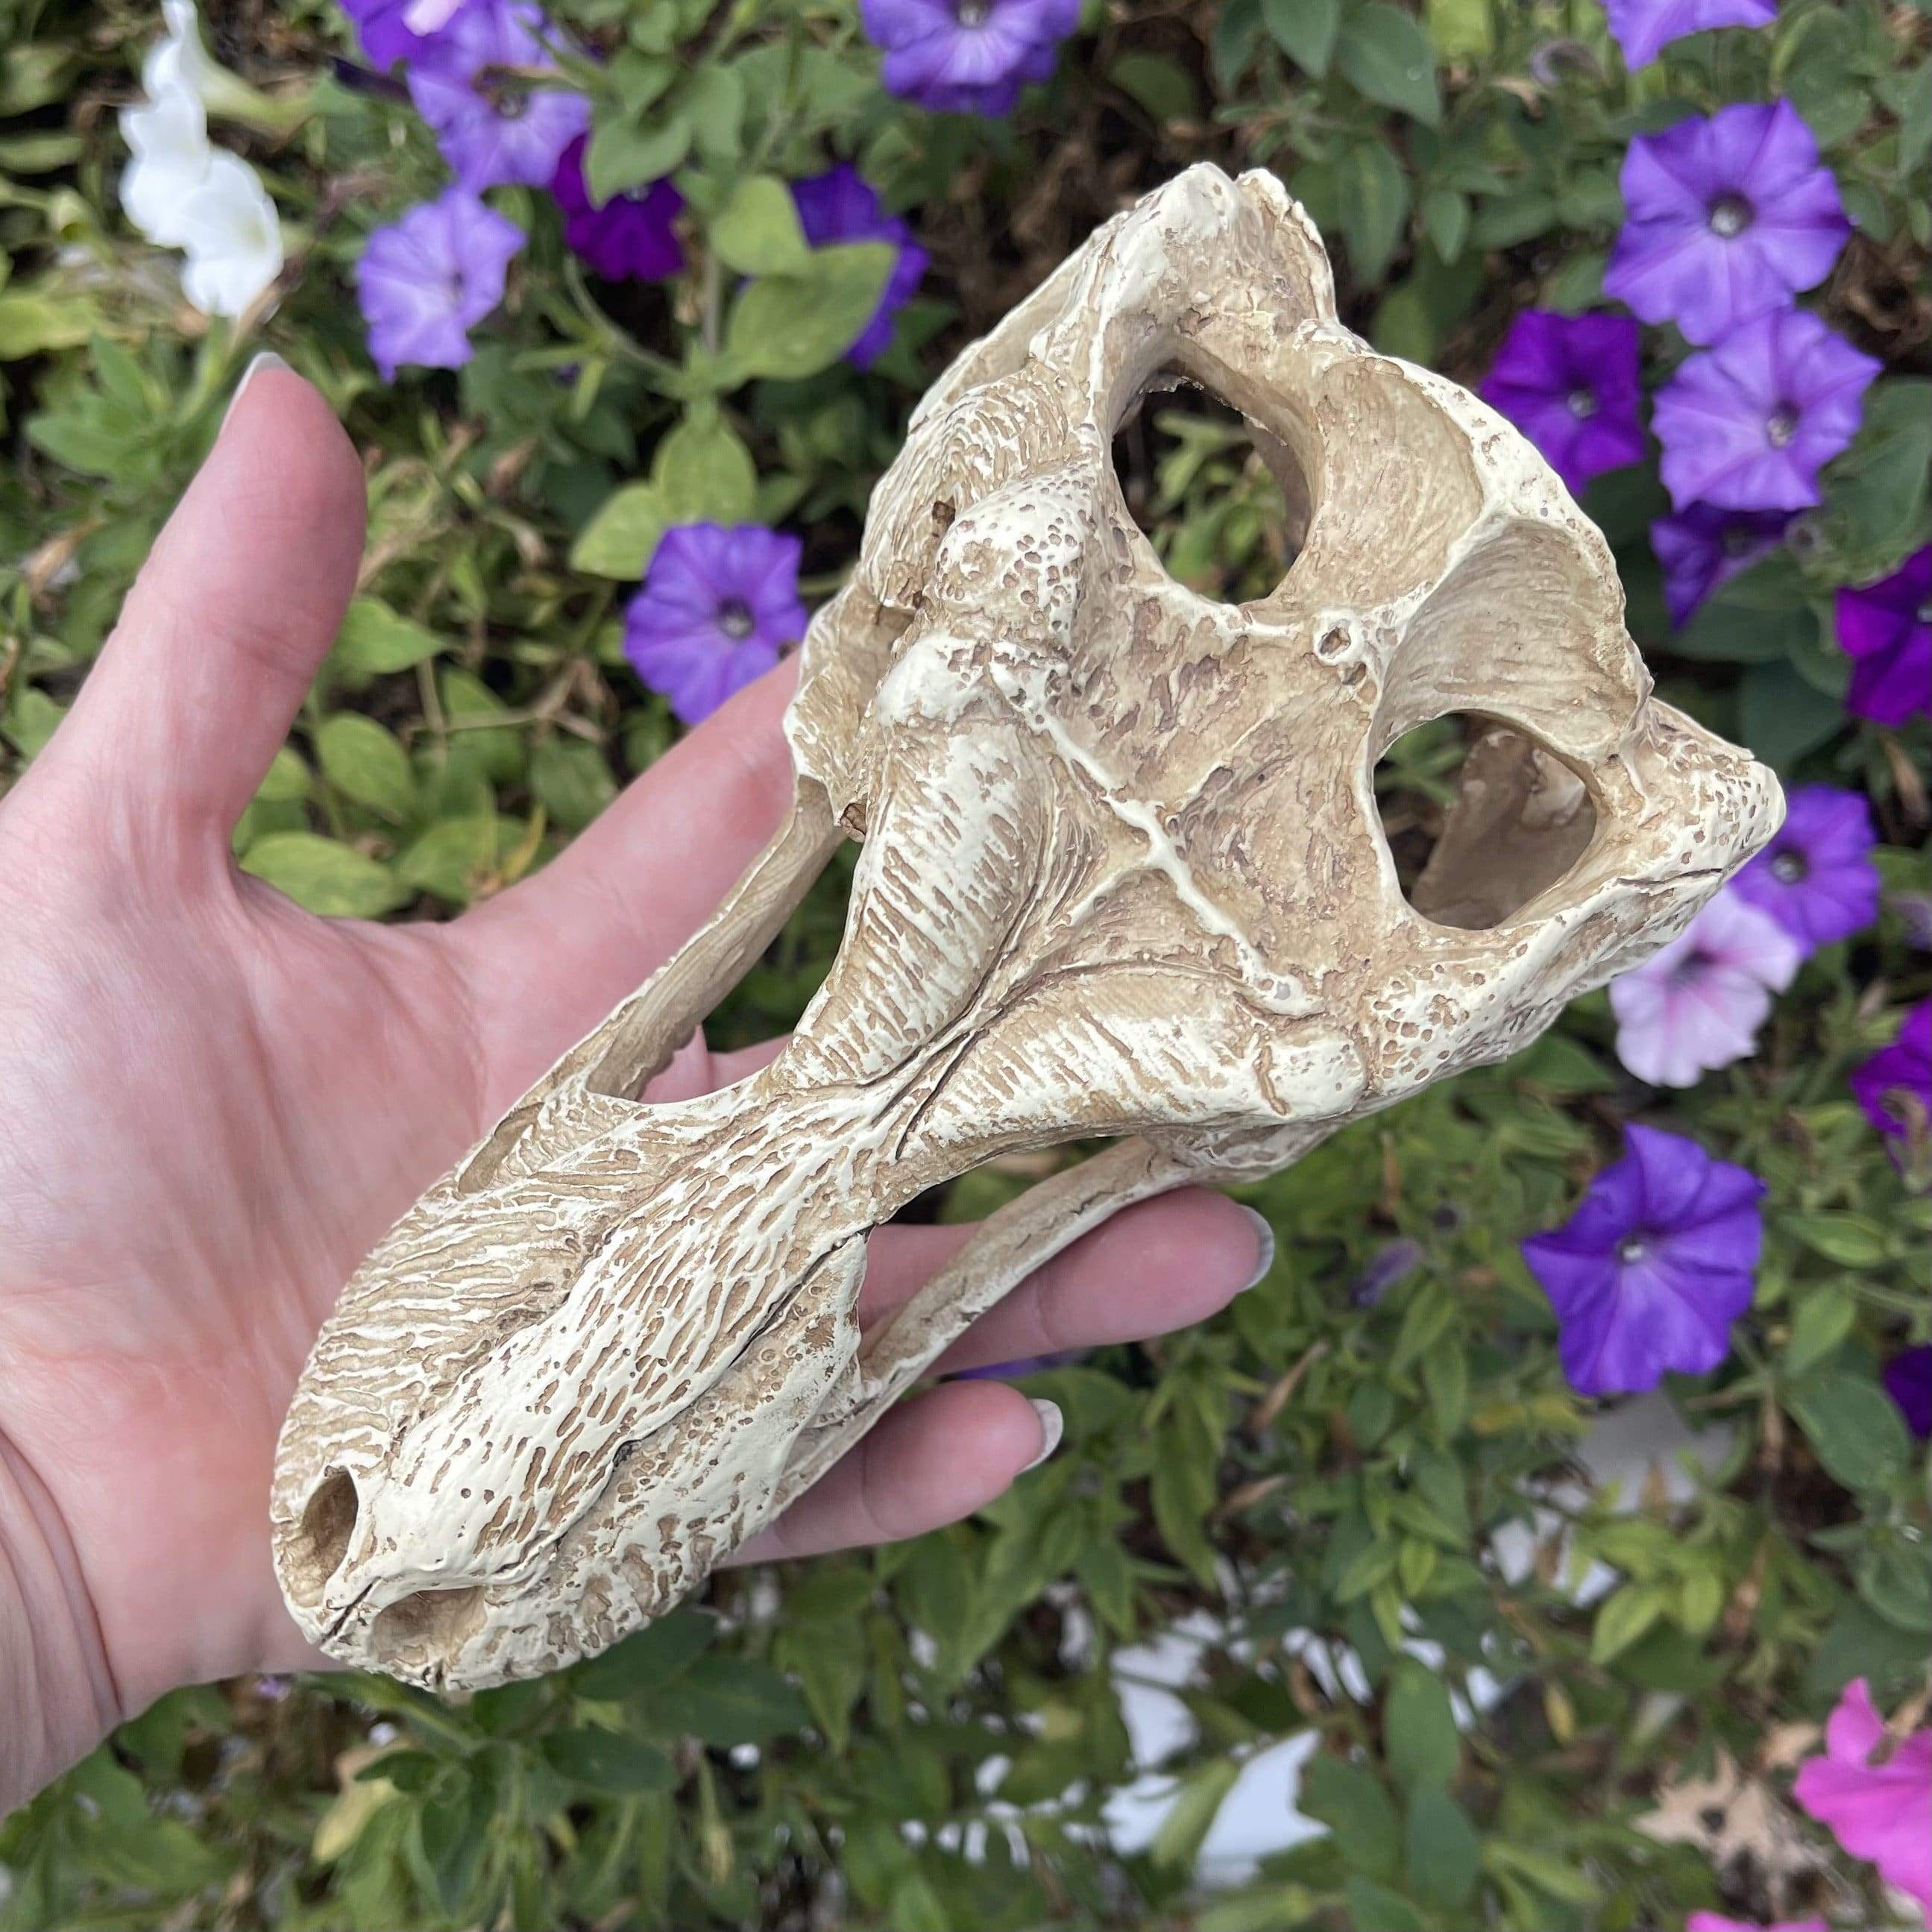 Komodo Resin Ornament T-Rex Skull Resin Ornament - Large